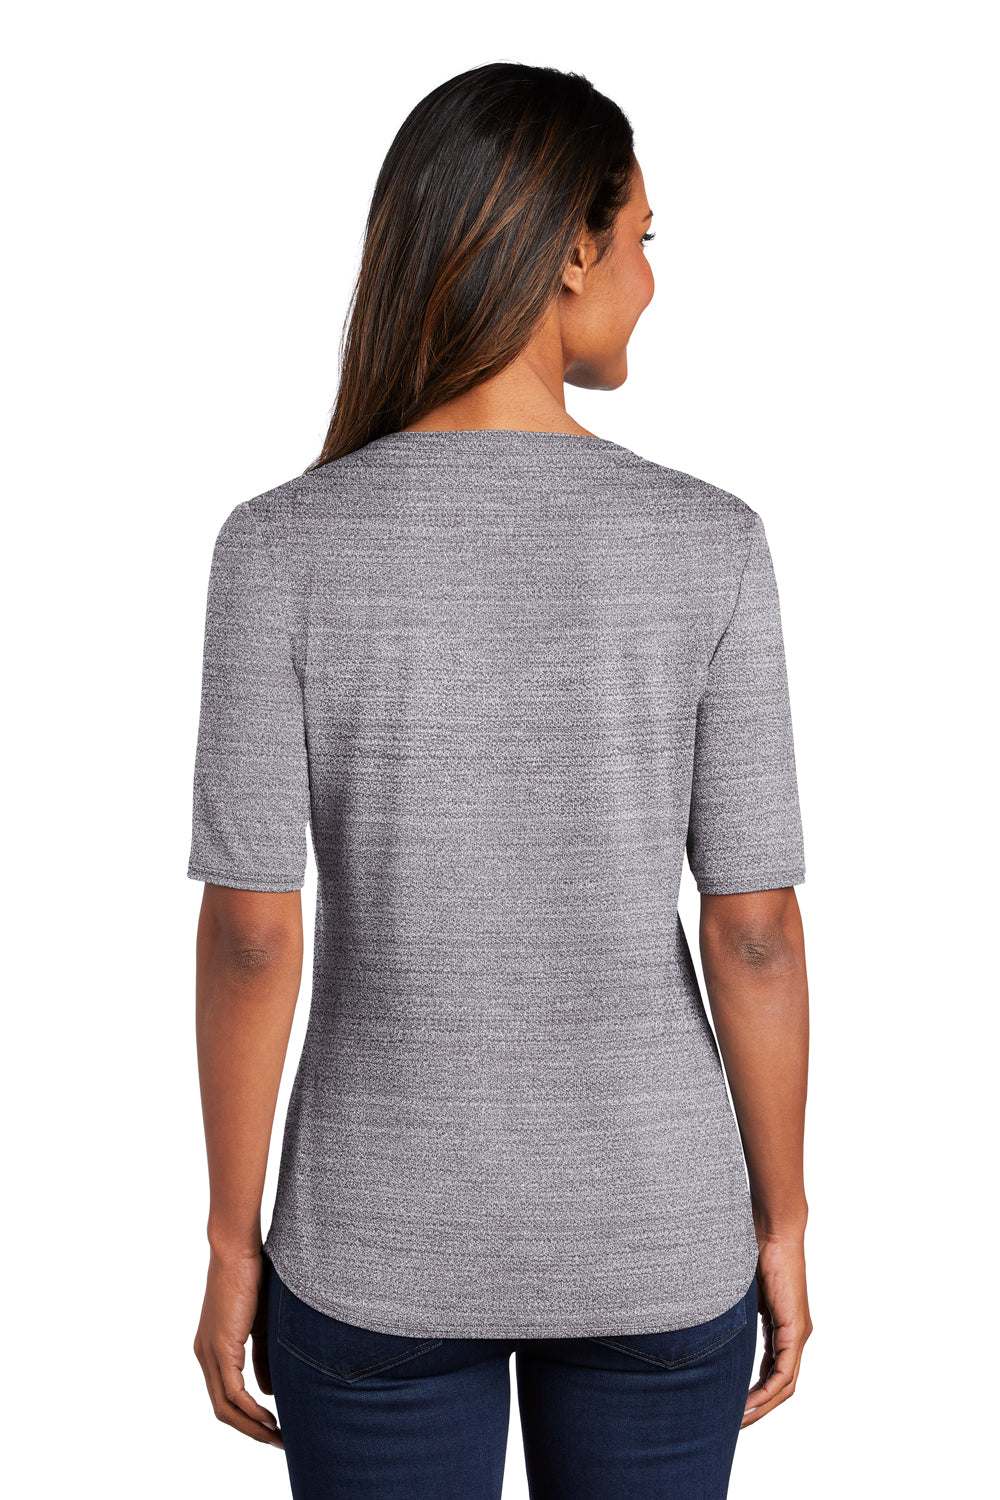 Port Authority Womens Stretch Short Sleeve Polo Shirt Graphite Grey/White Side